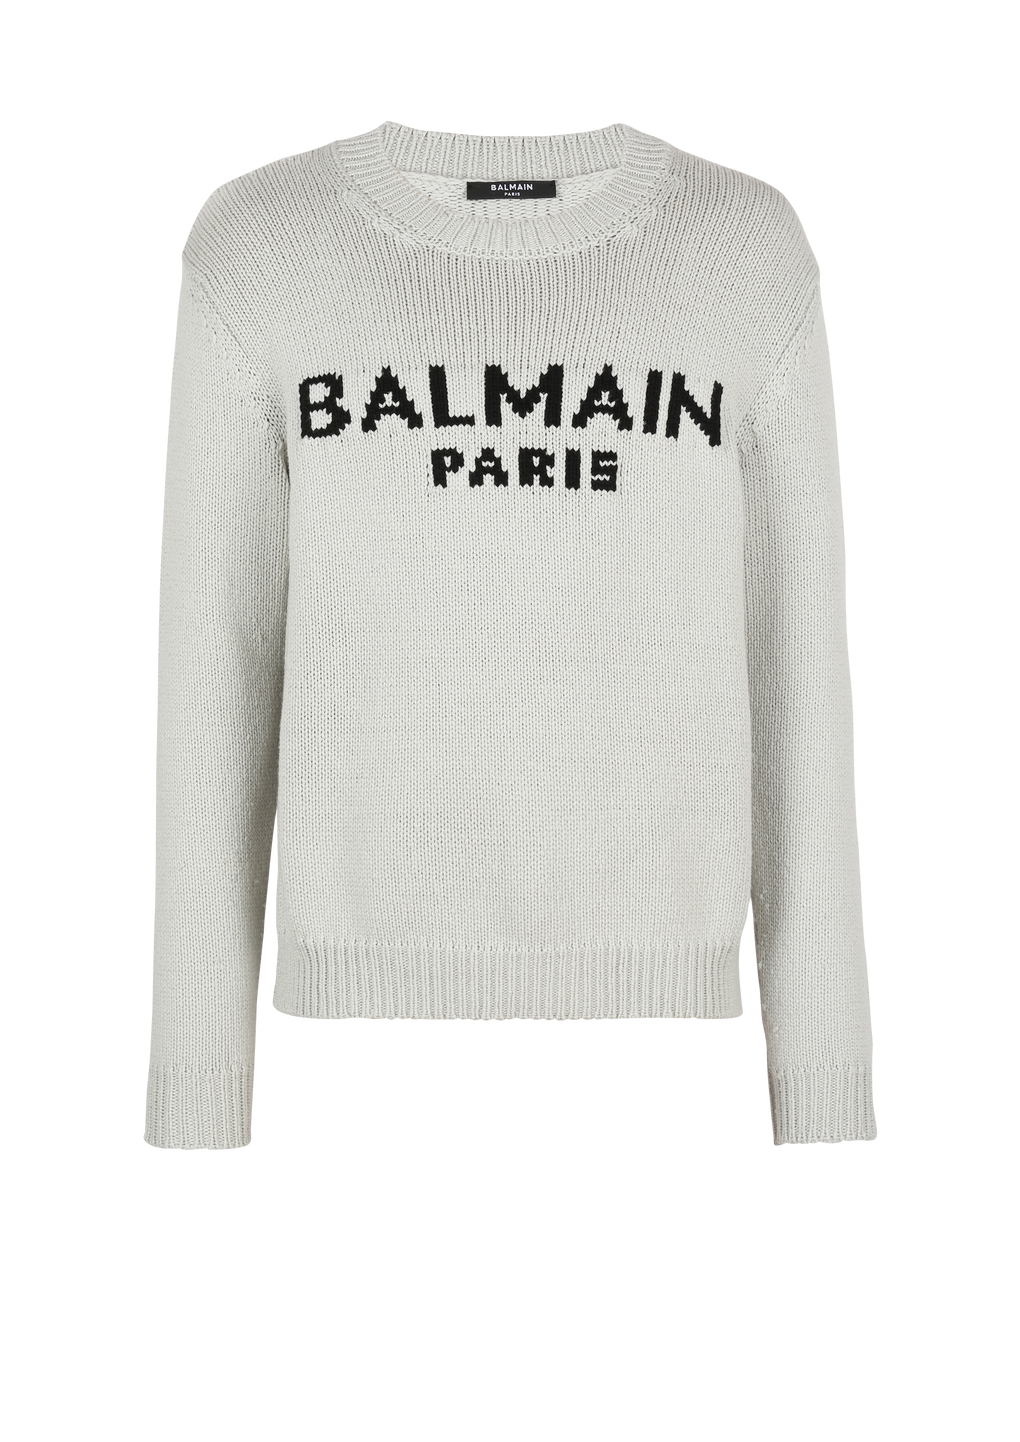 Wool jumper with Balmain Paris logo, grey, hi-res